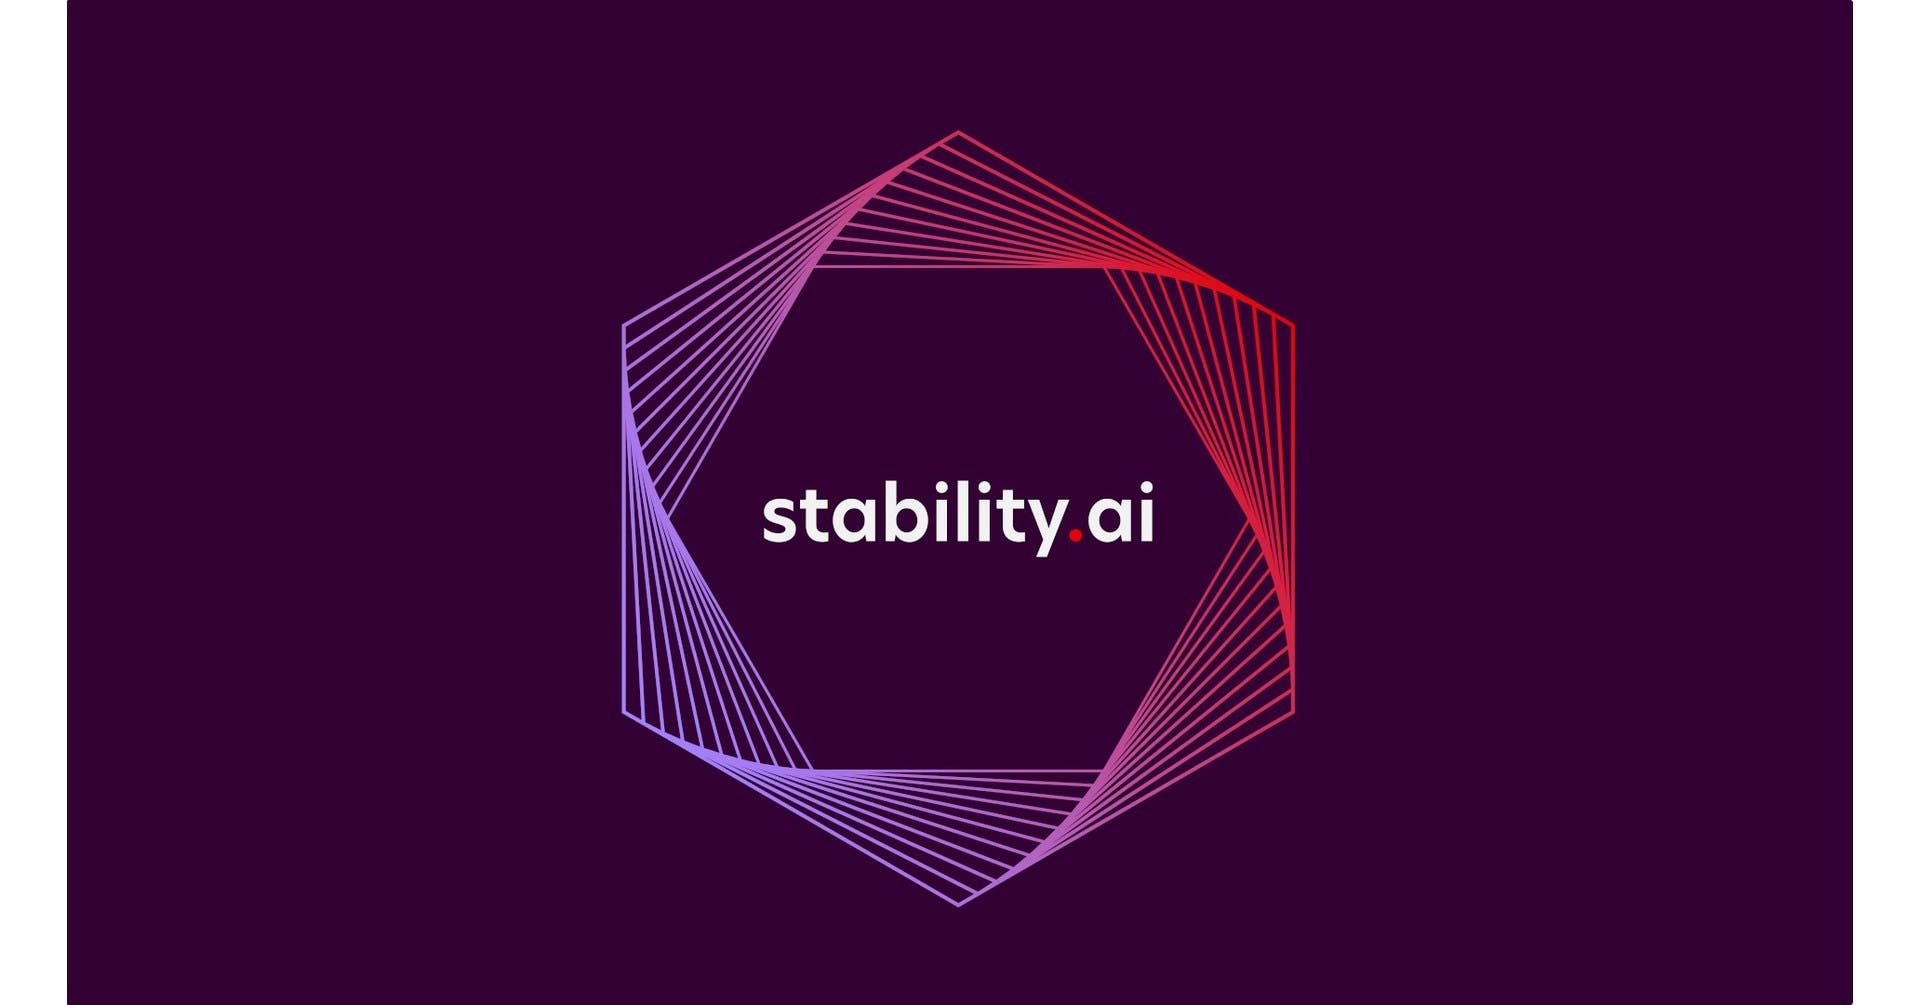 Stability AI design